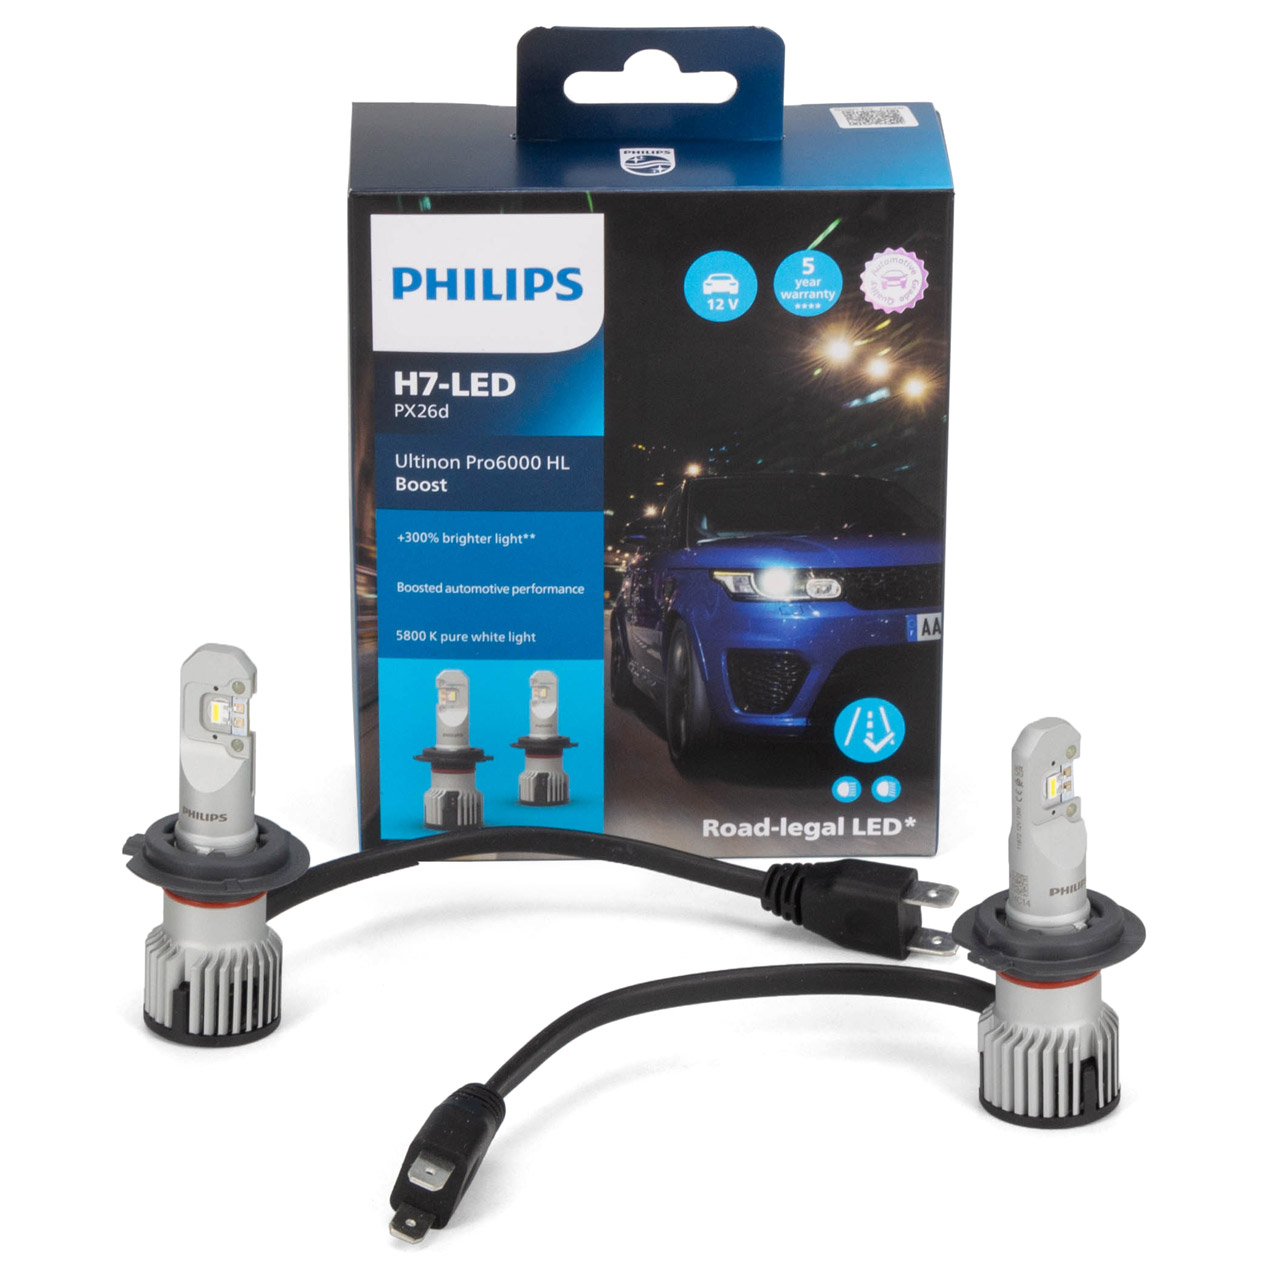 2x PHILIPS Ultinon Pro6000 HL Boost H7 LED mit Straßenzulassung 12V +300% 5.800K